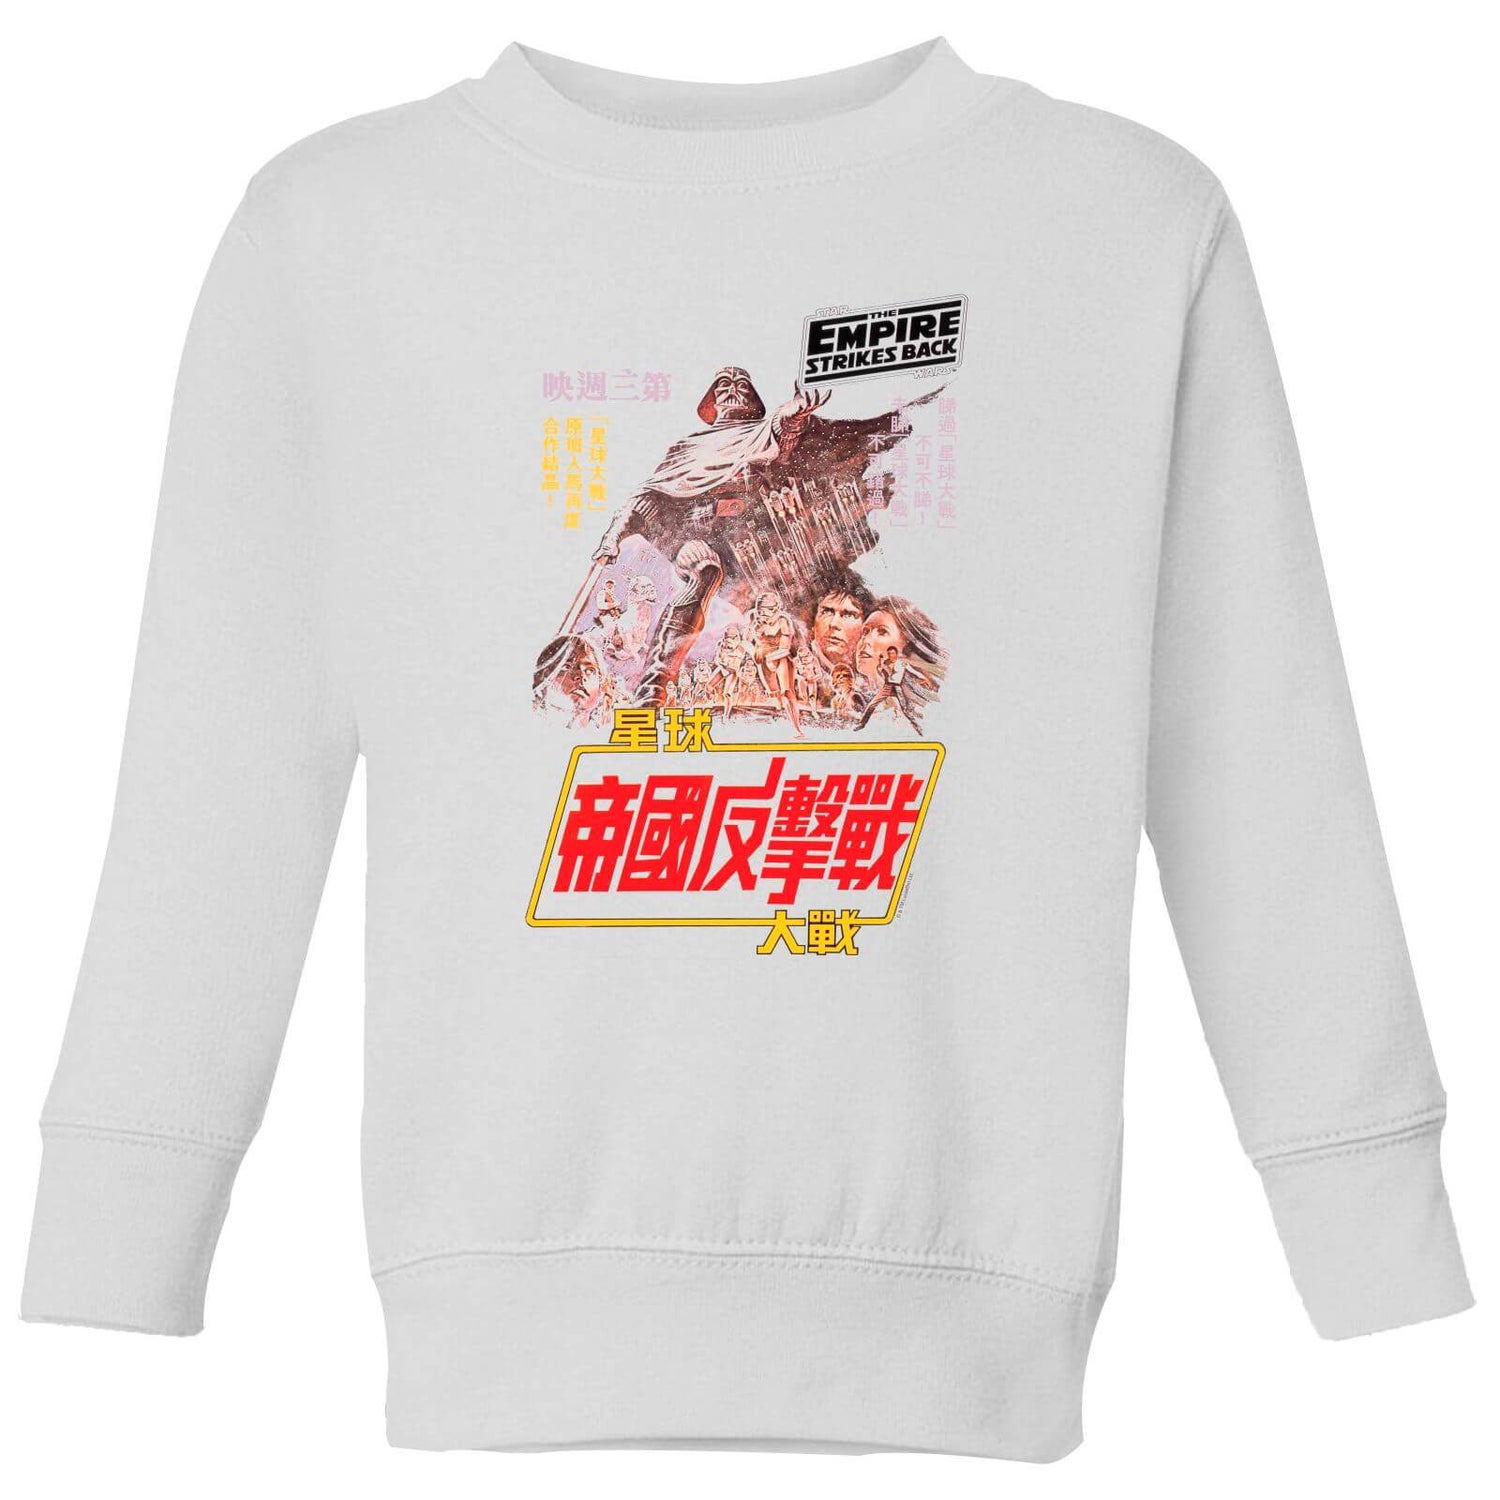 Star Wars Empire Strikes Back Kanji Poster Kids' Sweatshirt - White